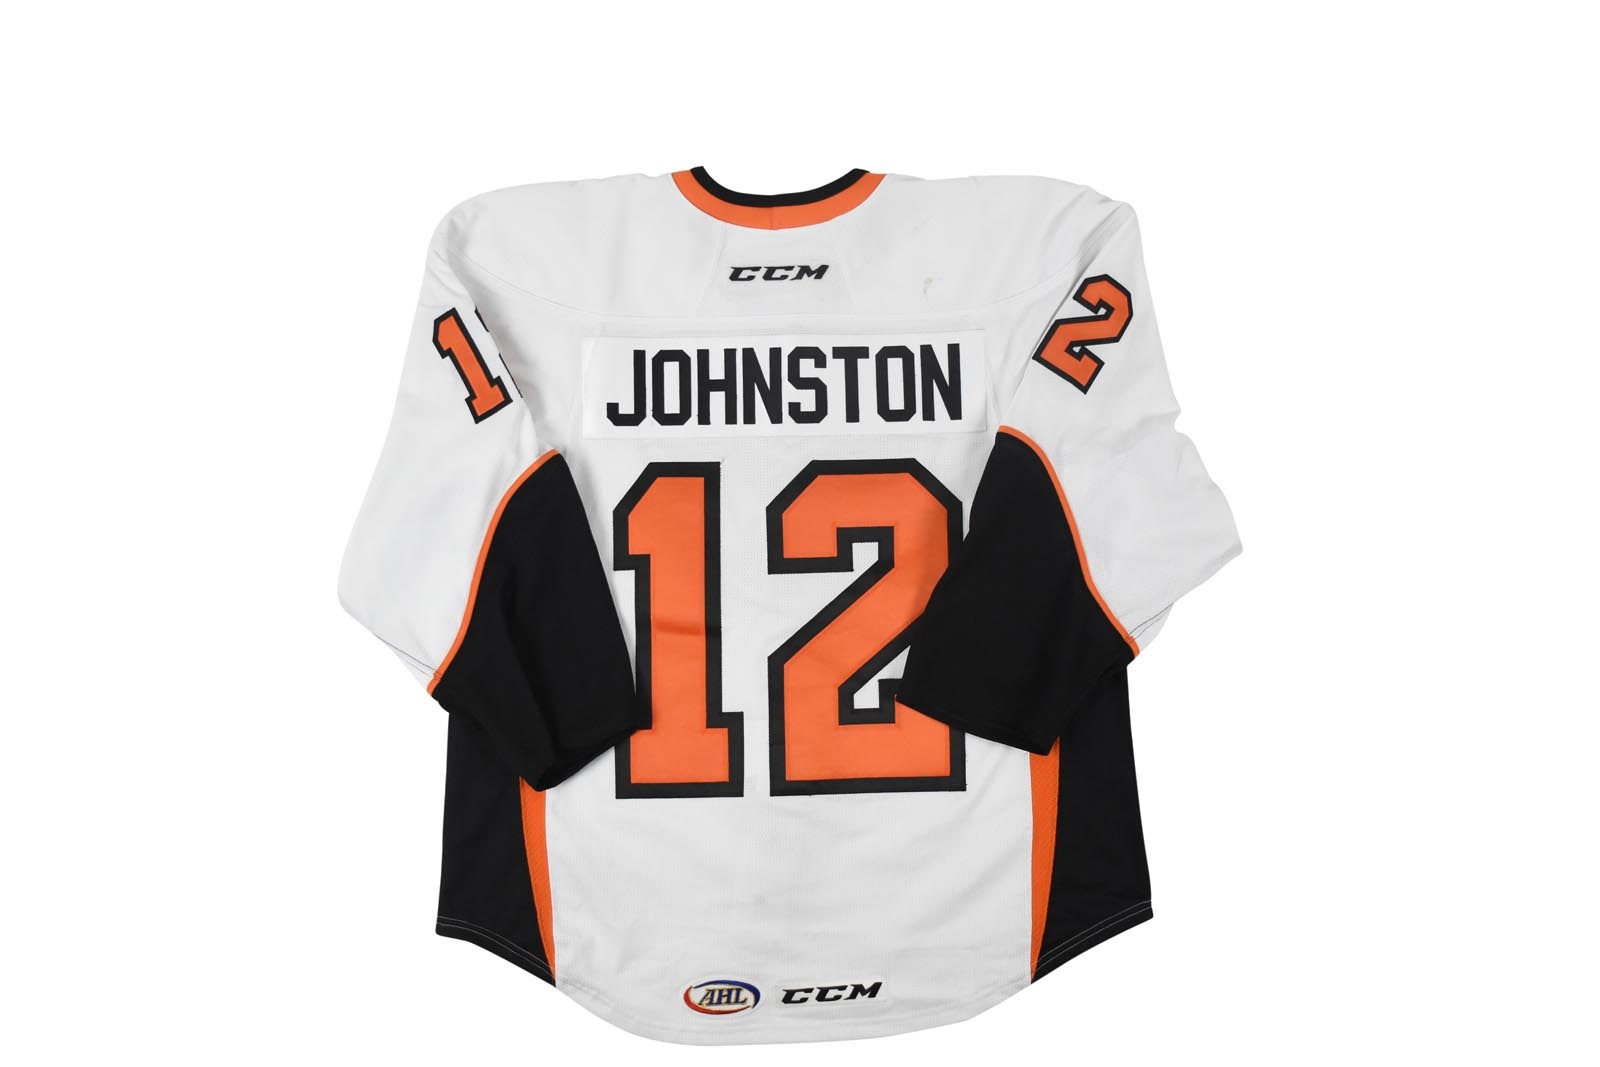 Hockey - 2014-15 Andrew Johnston Lehigh Valley Phantoms (Flyers) Game Jersey